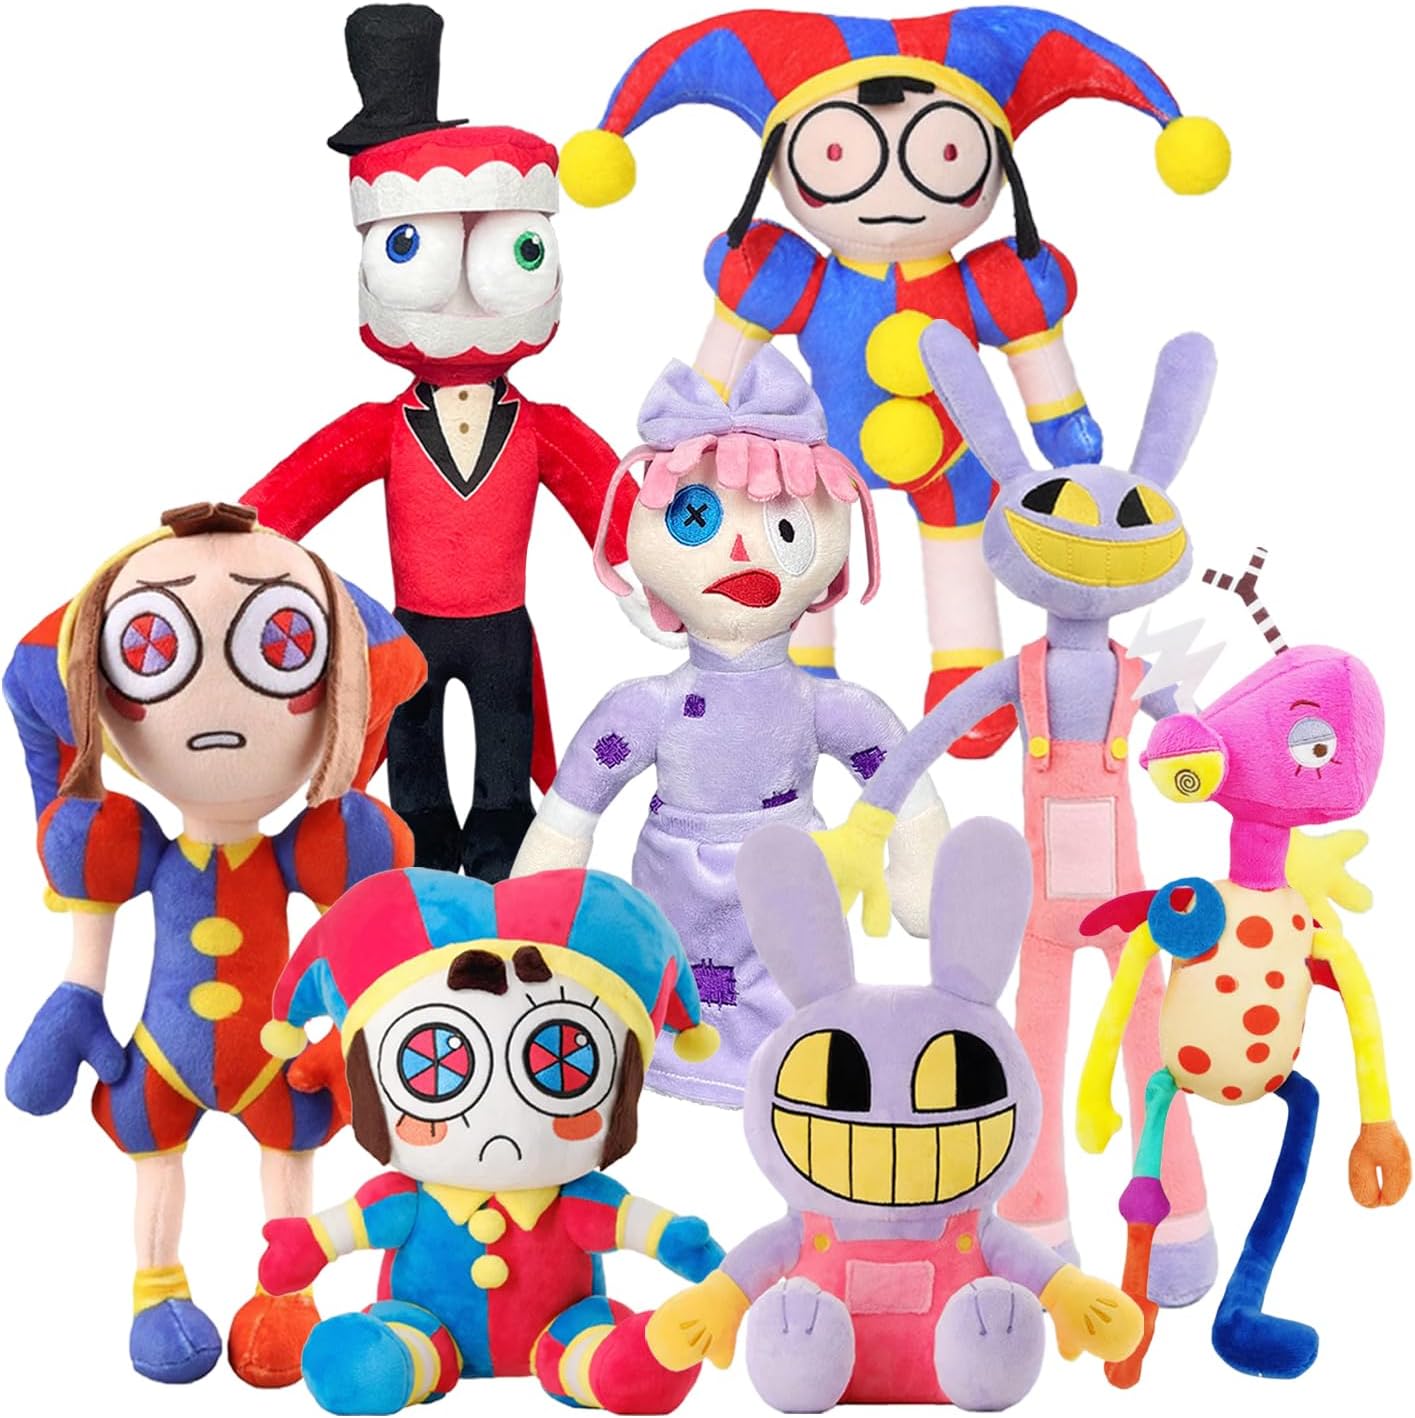 The Amazing Digital Circus Plush Pack 4, Jax and Pomni Plush, Cute Stuffed Figure Doll for Kids and Adults (4 Pack) - Cykapu